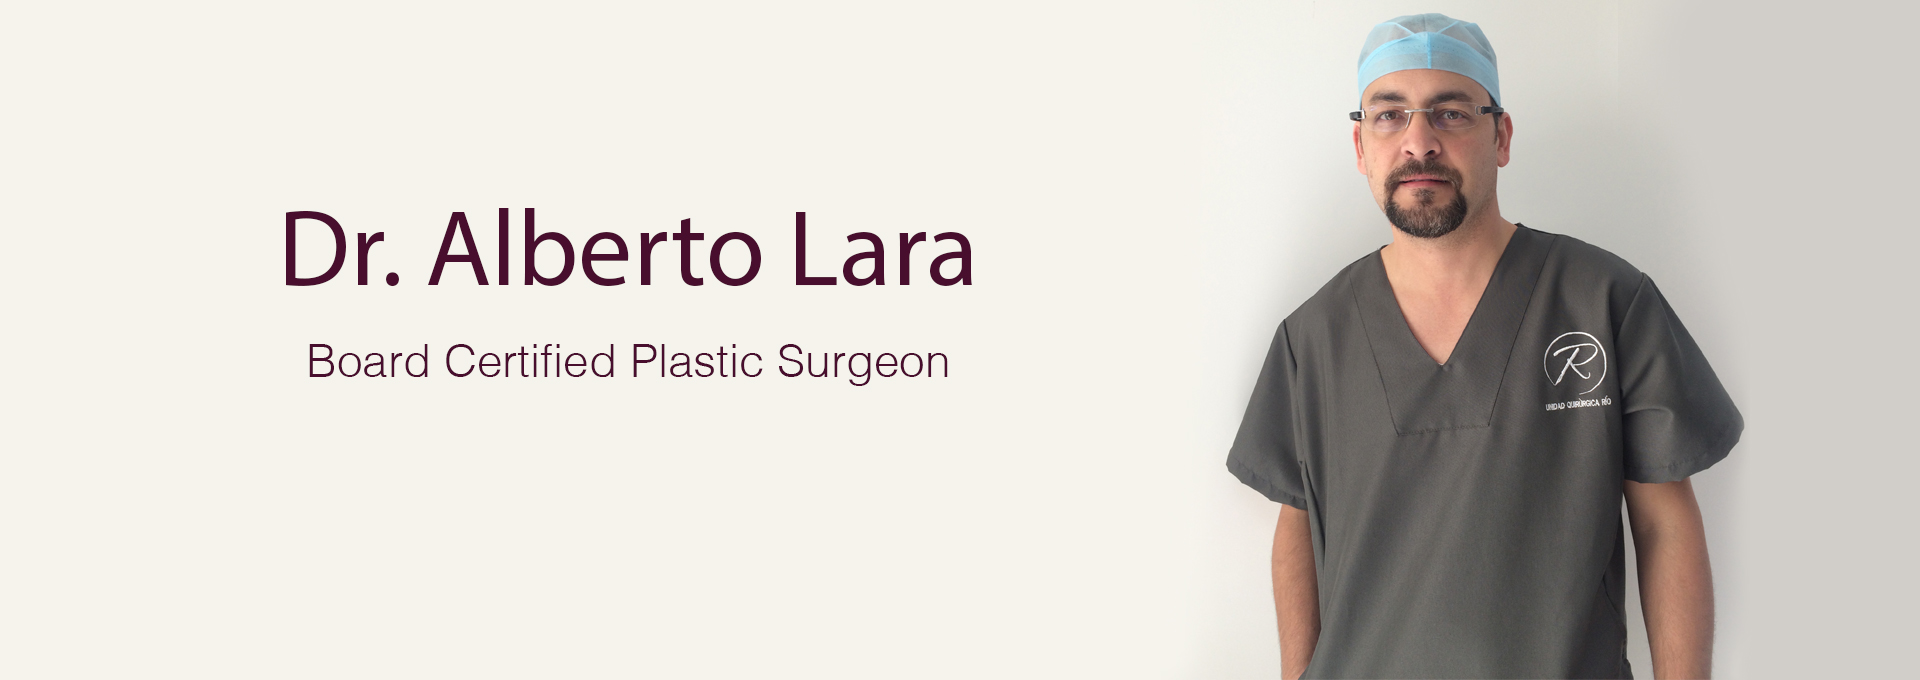 wp content uploads 2018 01 dr lara plastic surgery banner 1.jpg